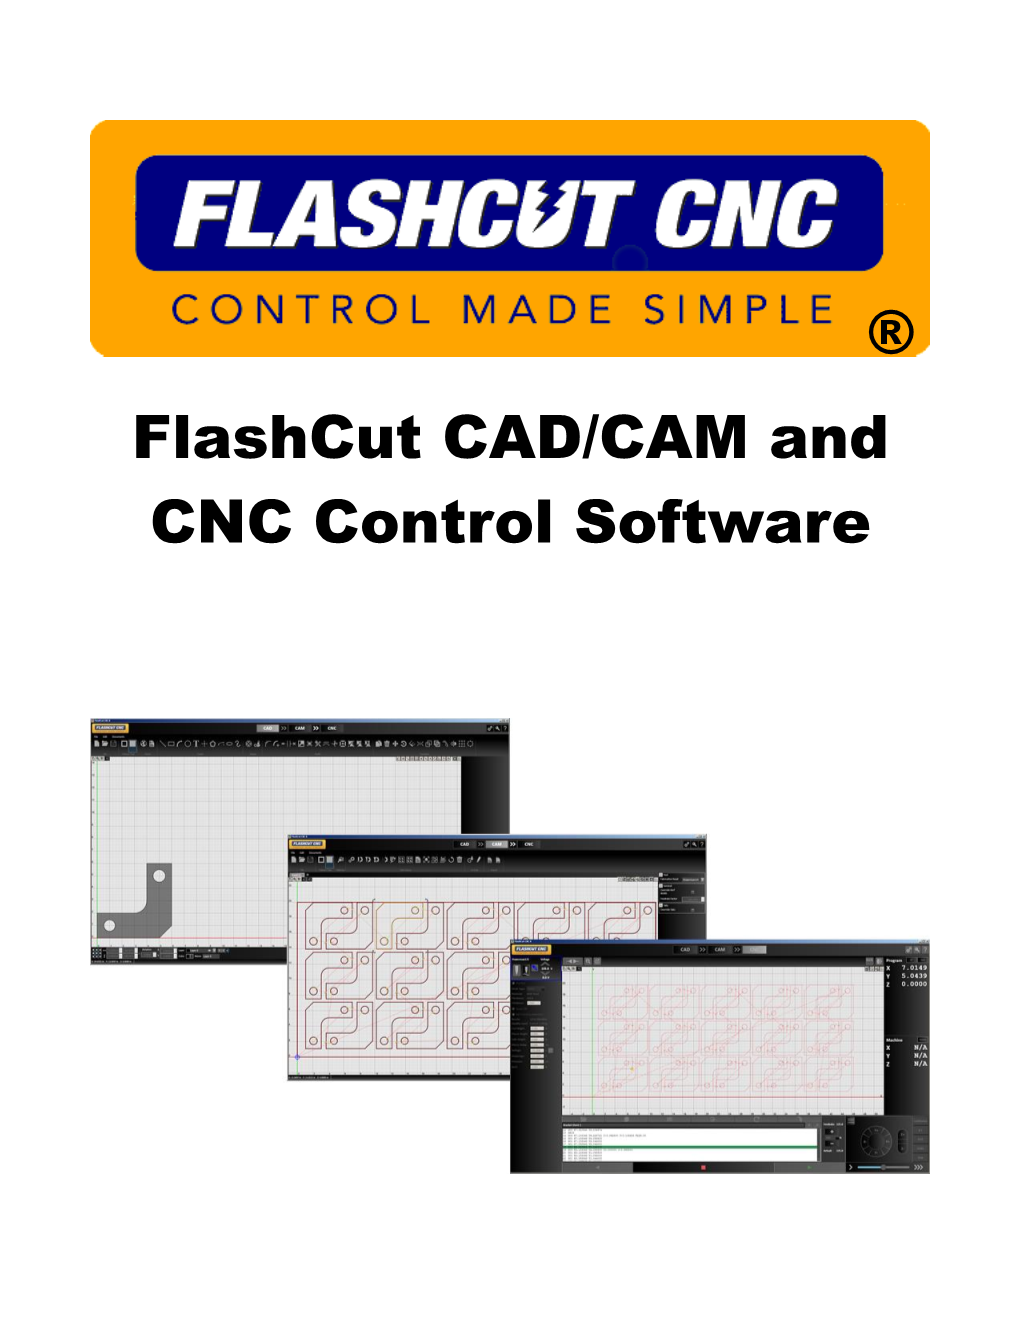 Flashcut CAD/CAM and CNC Control Software